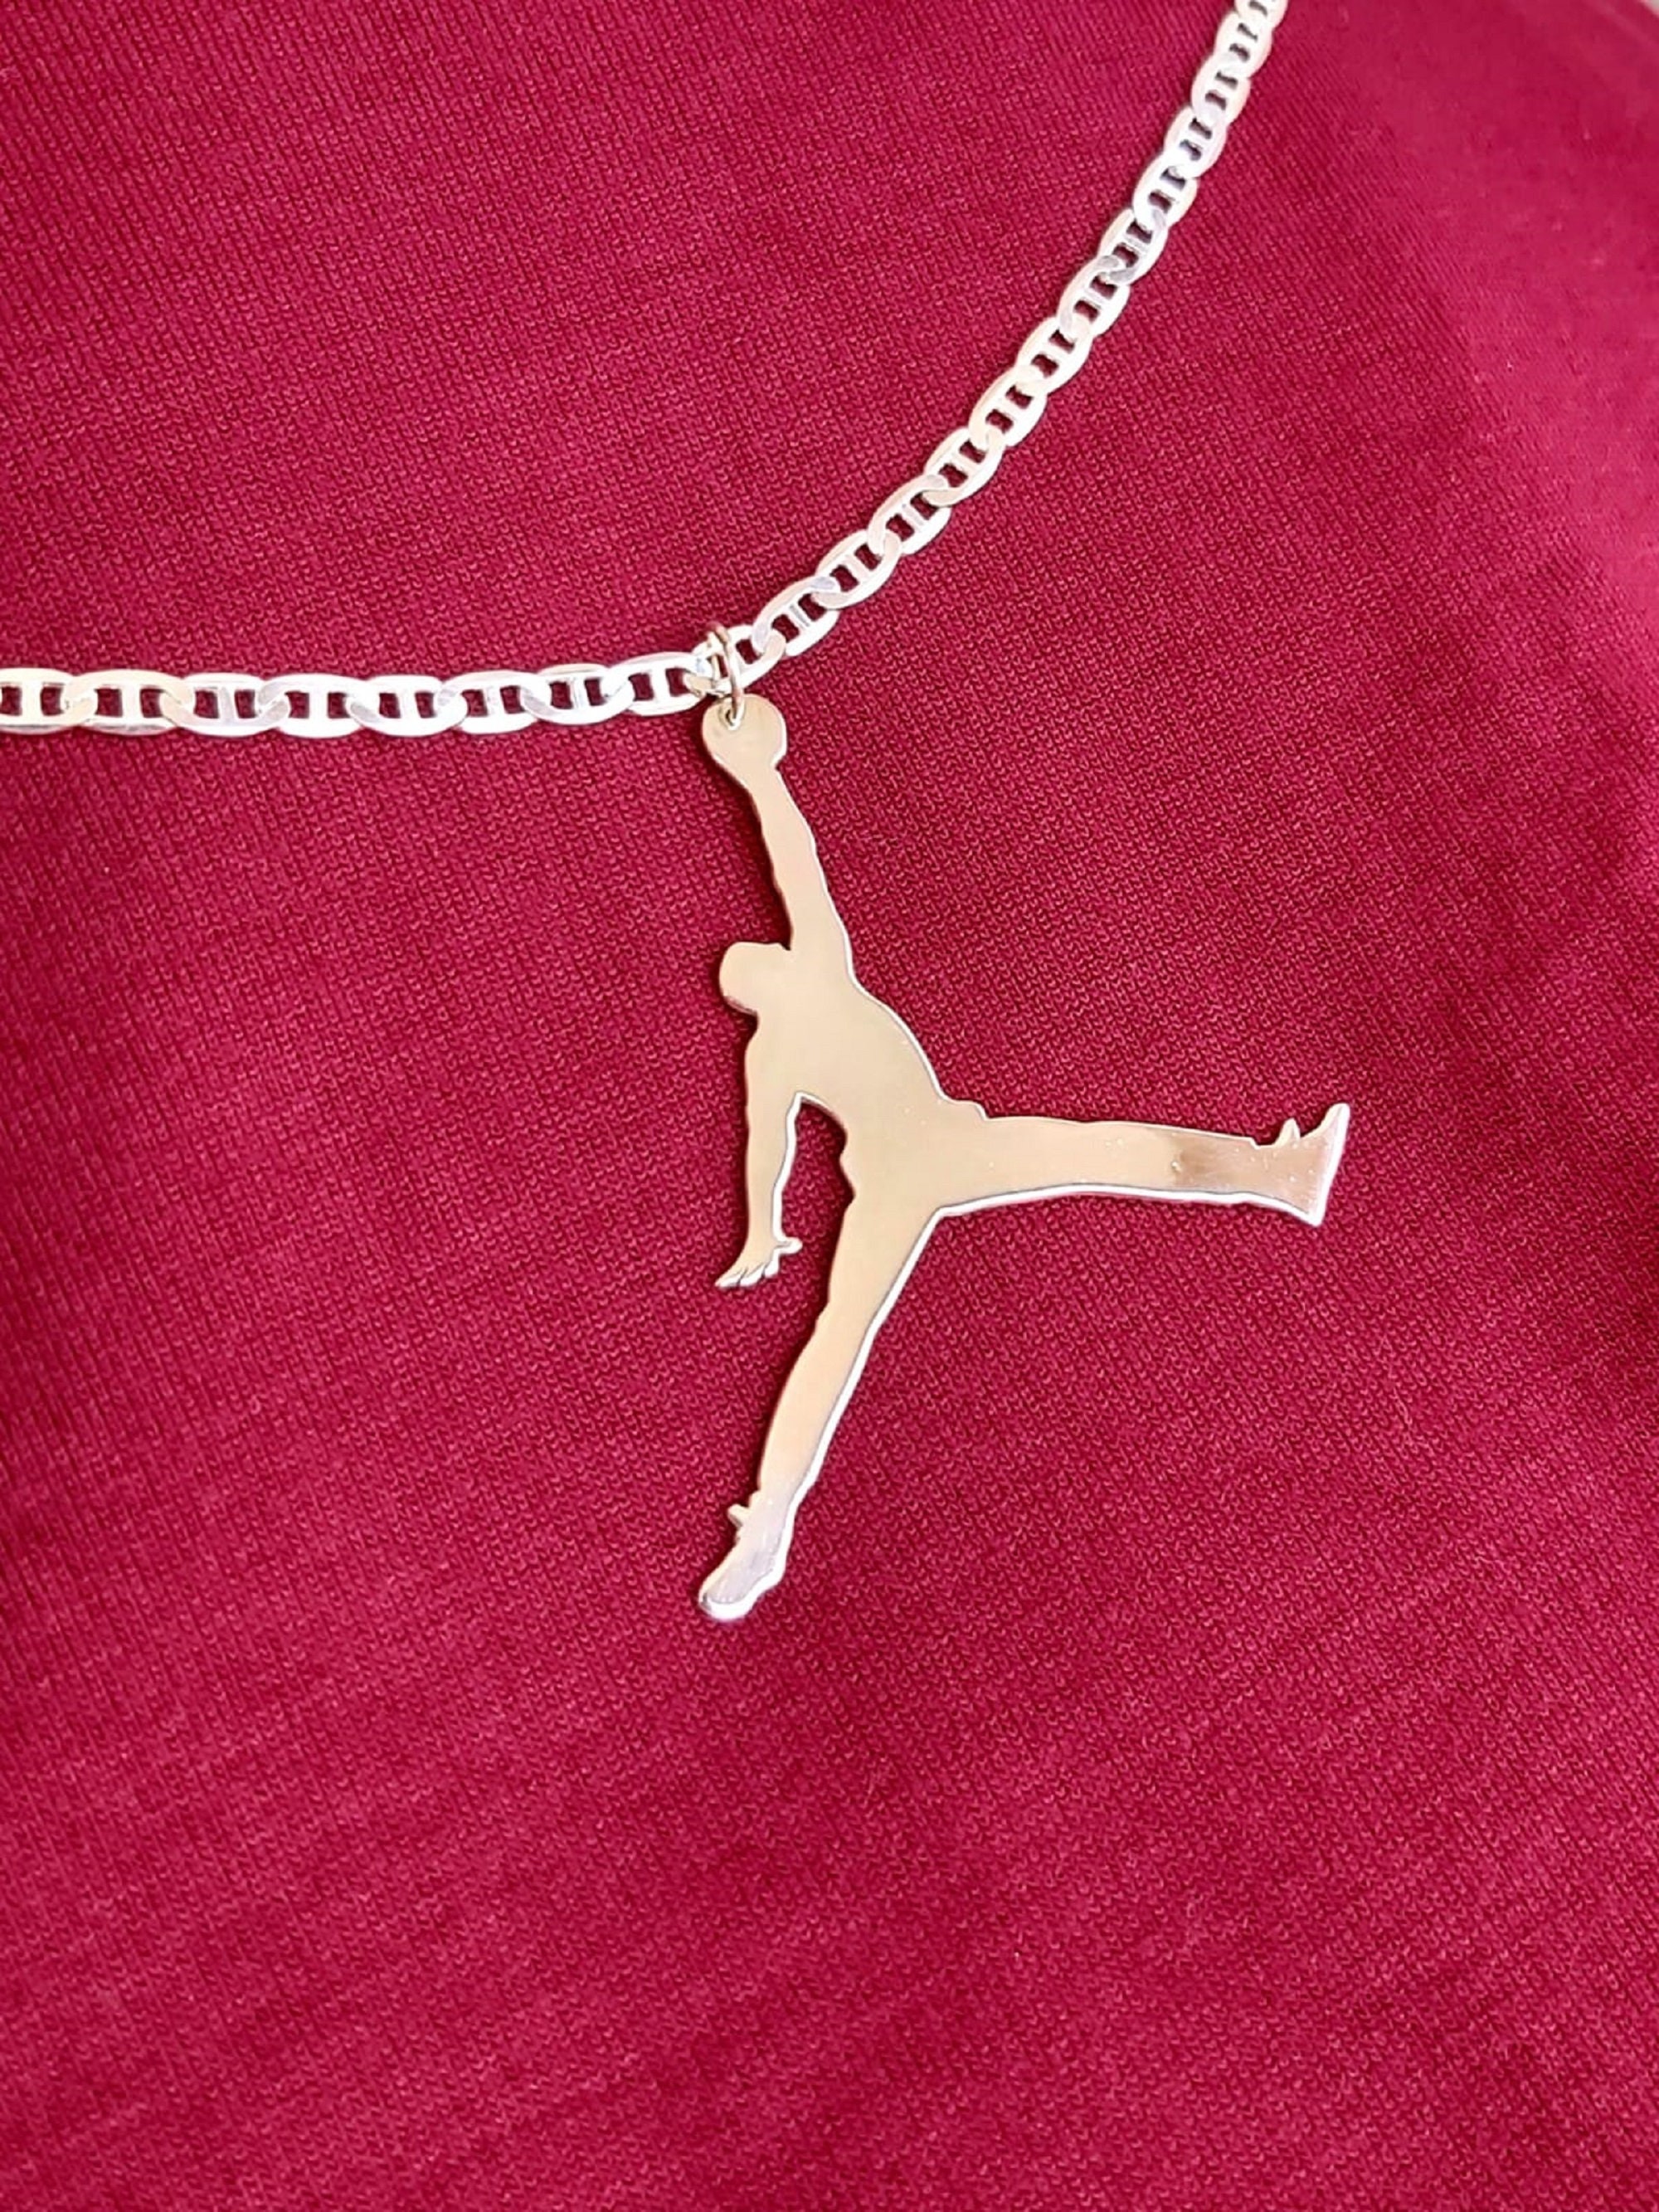 strategi dæk performer Michael Jordan Pendant With Necklace Sterling Silver 925 NBA | Etsy